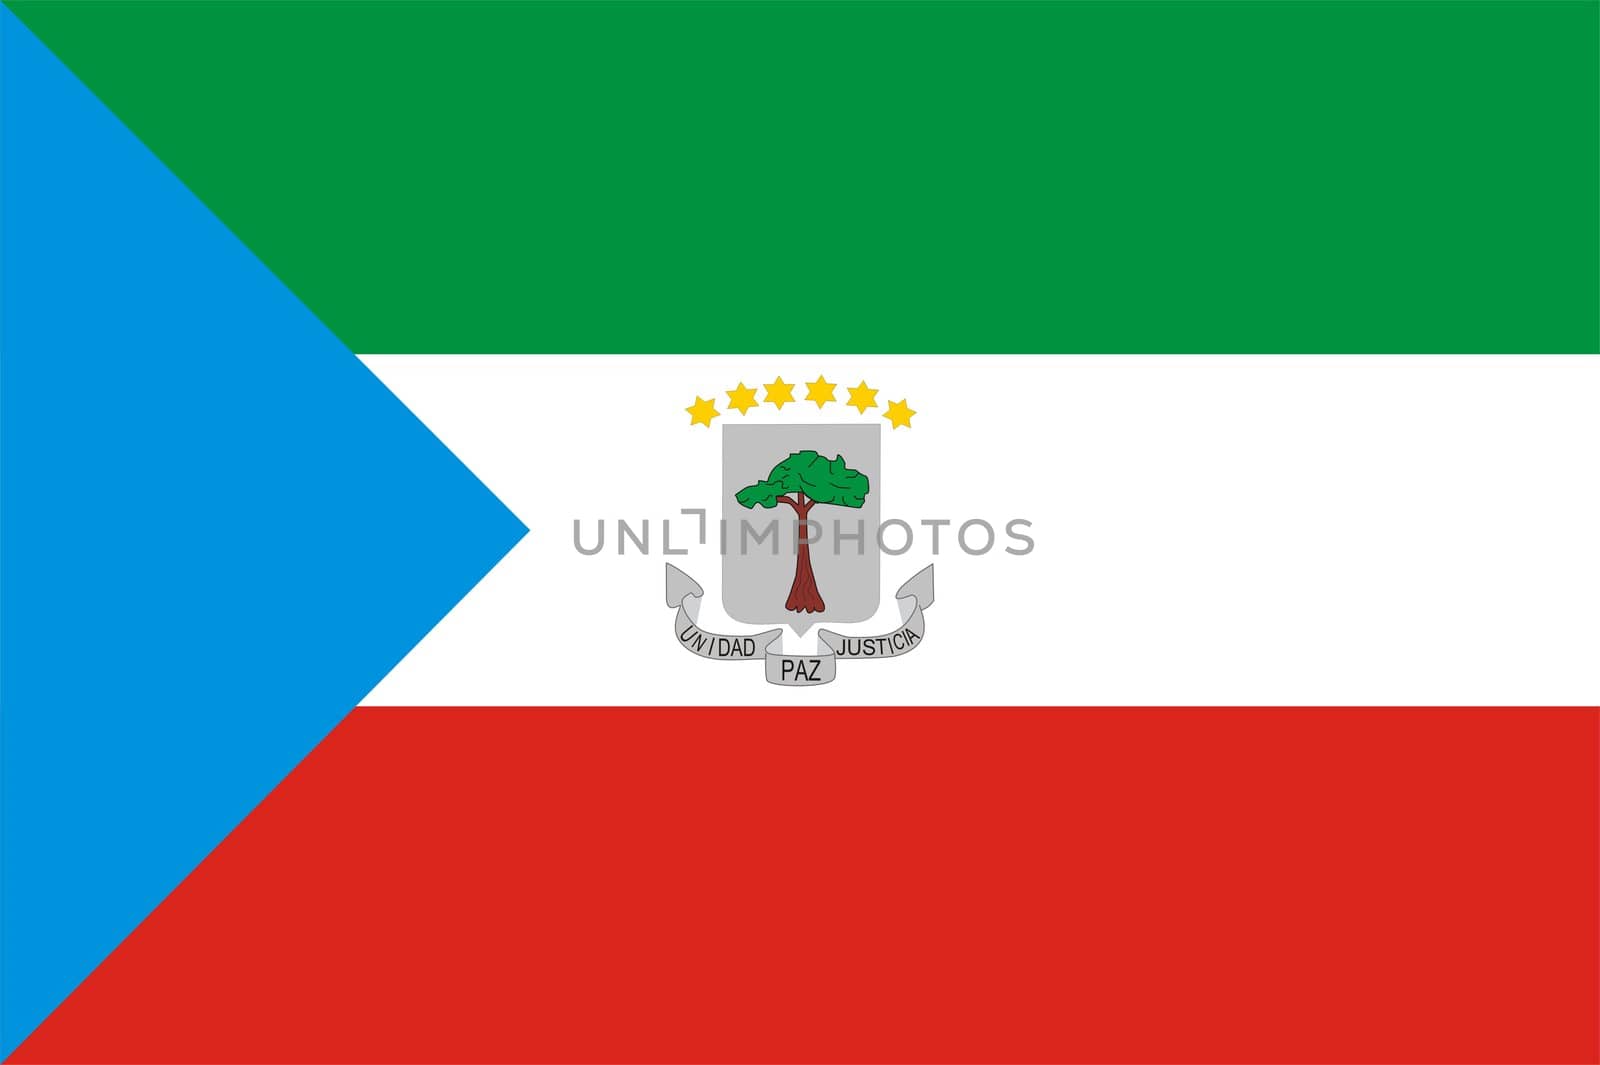 2D illustration of the flag of Equatorial Guinea